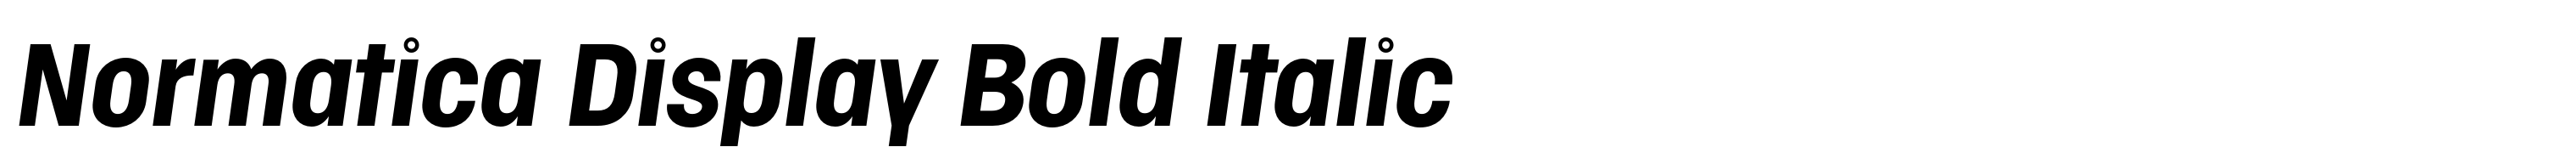 Normatica Display Bold Italic